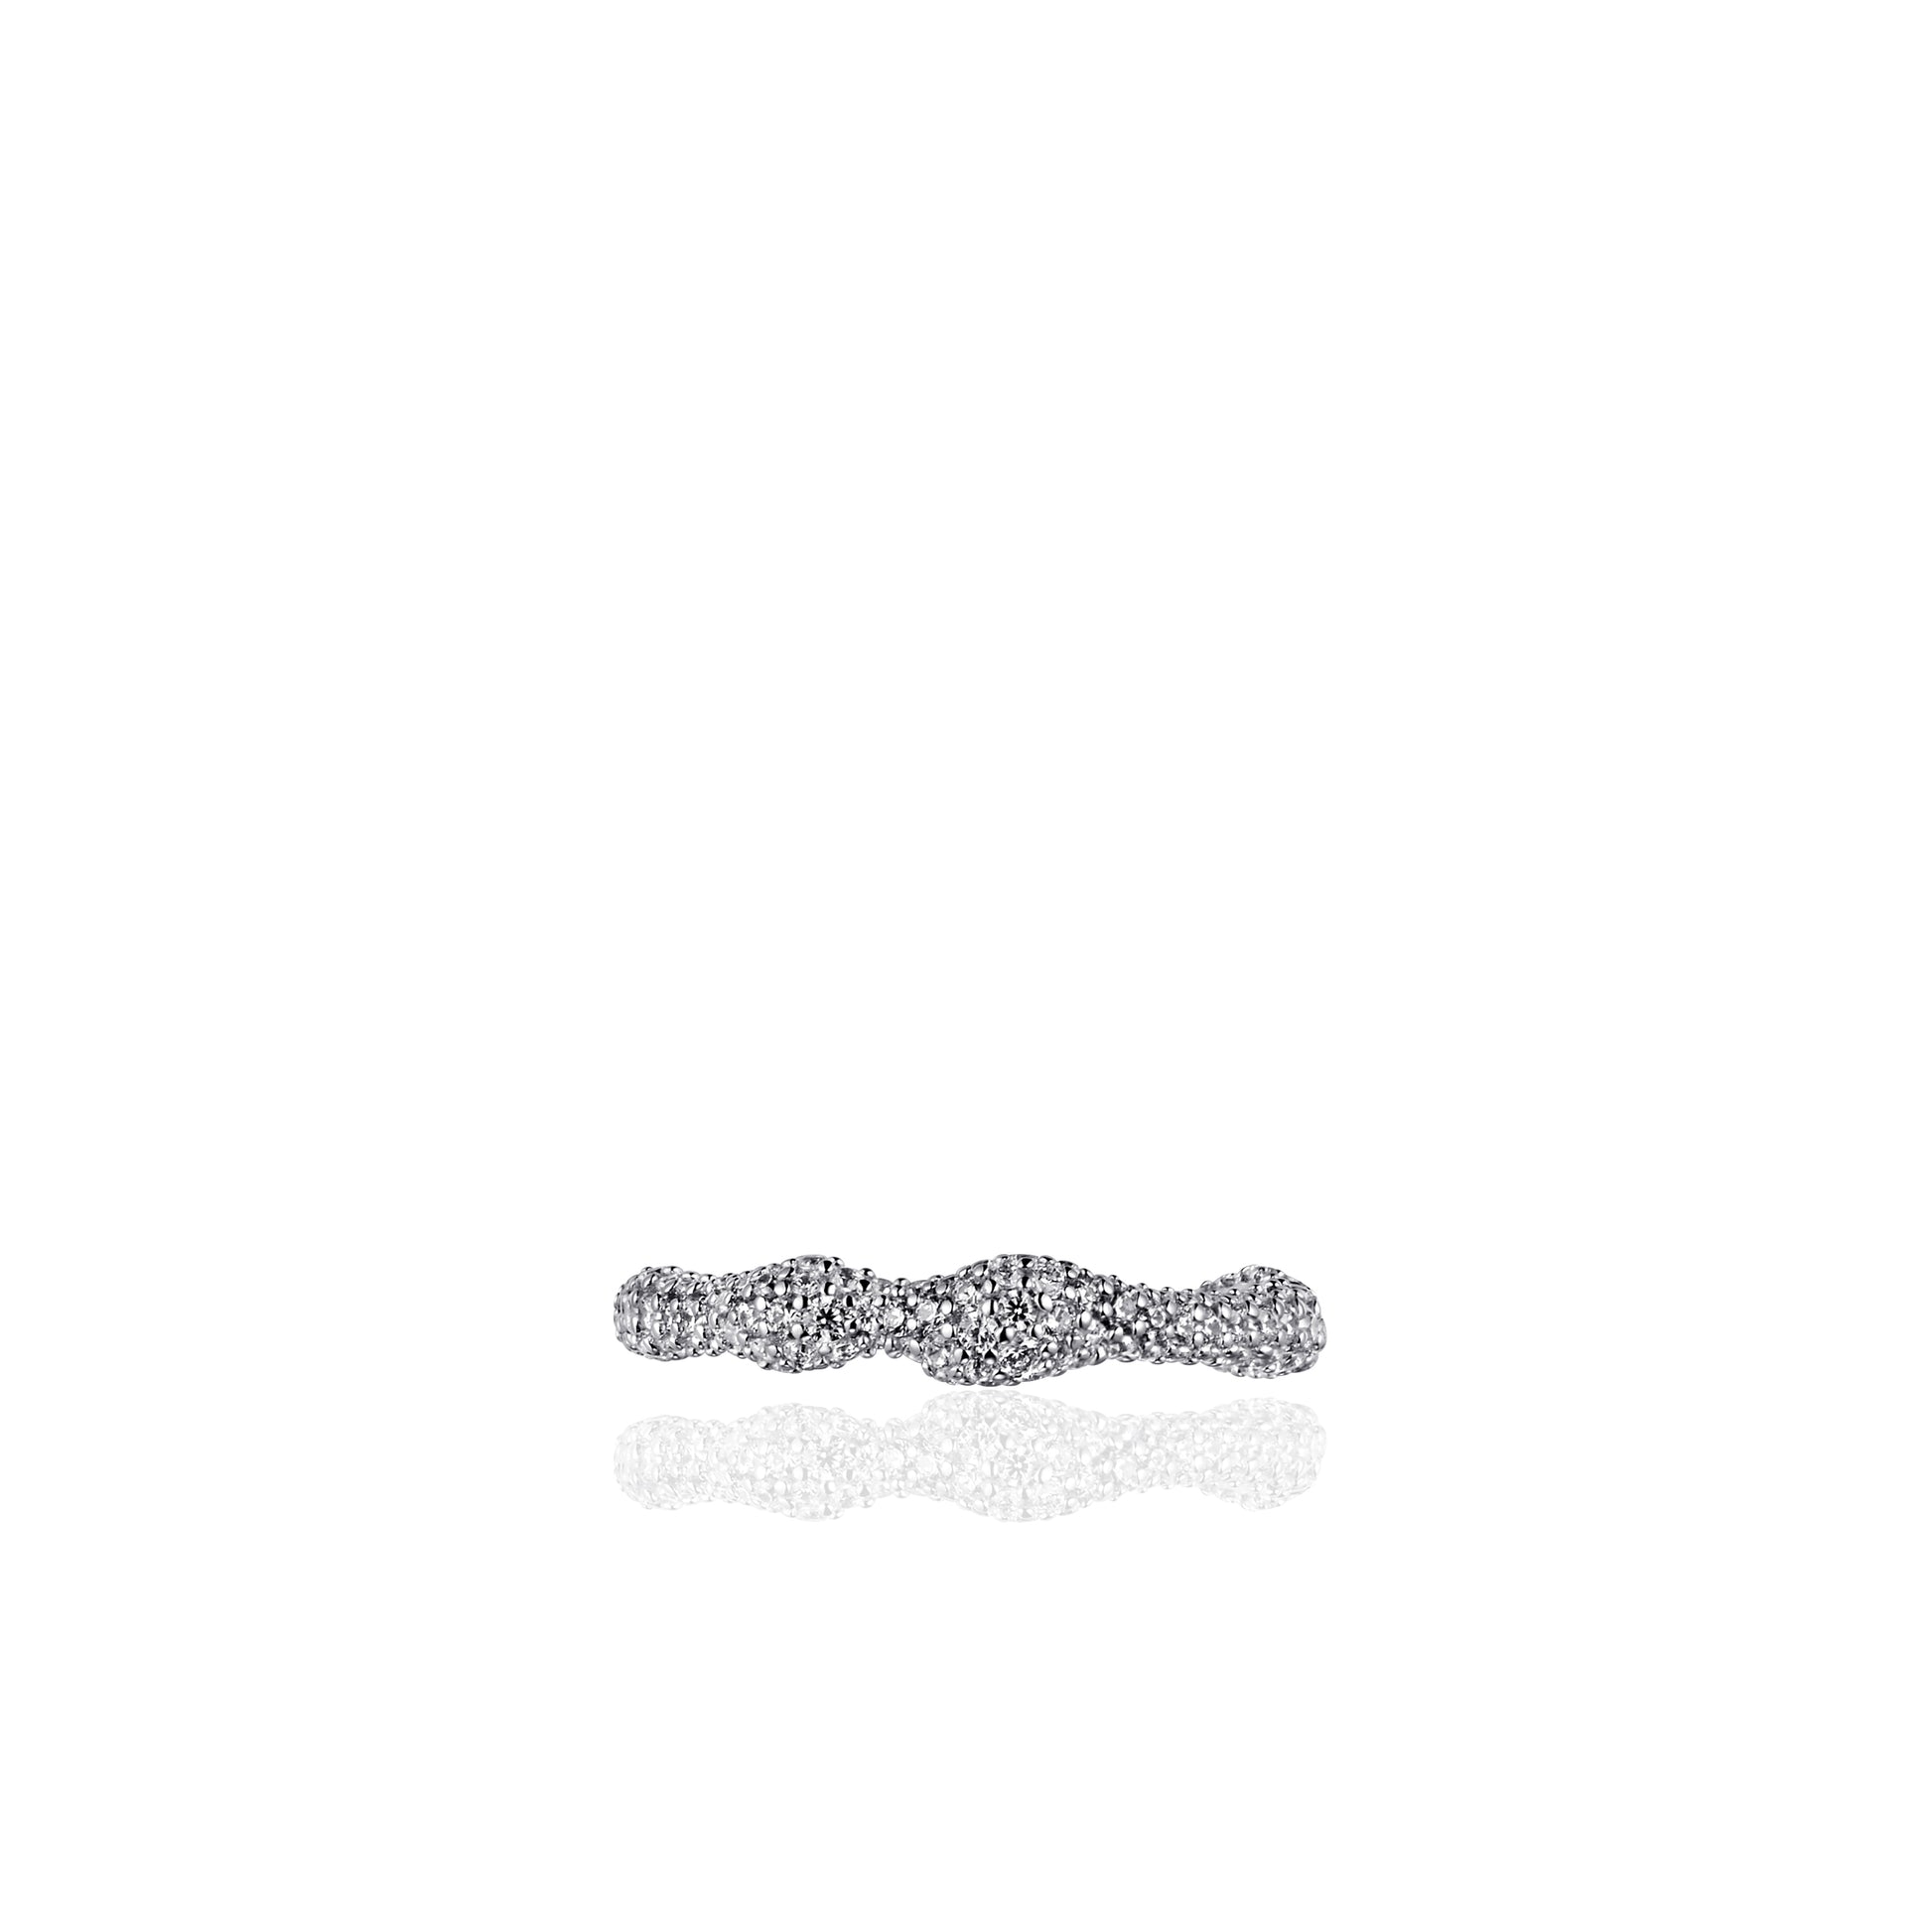 ORGANIC CZ Ring - Silver - John Ross Jewellers